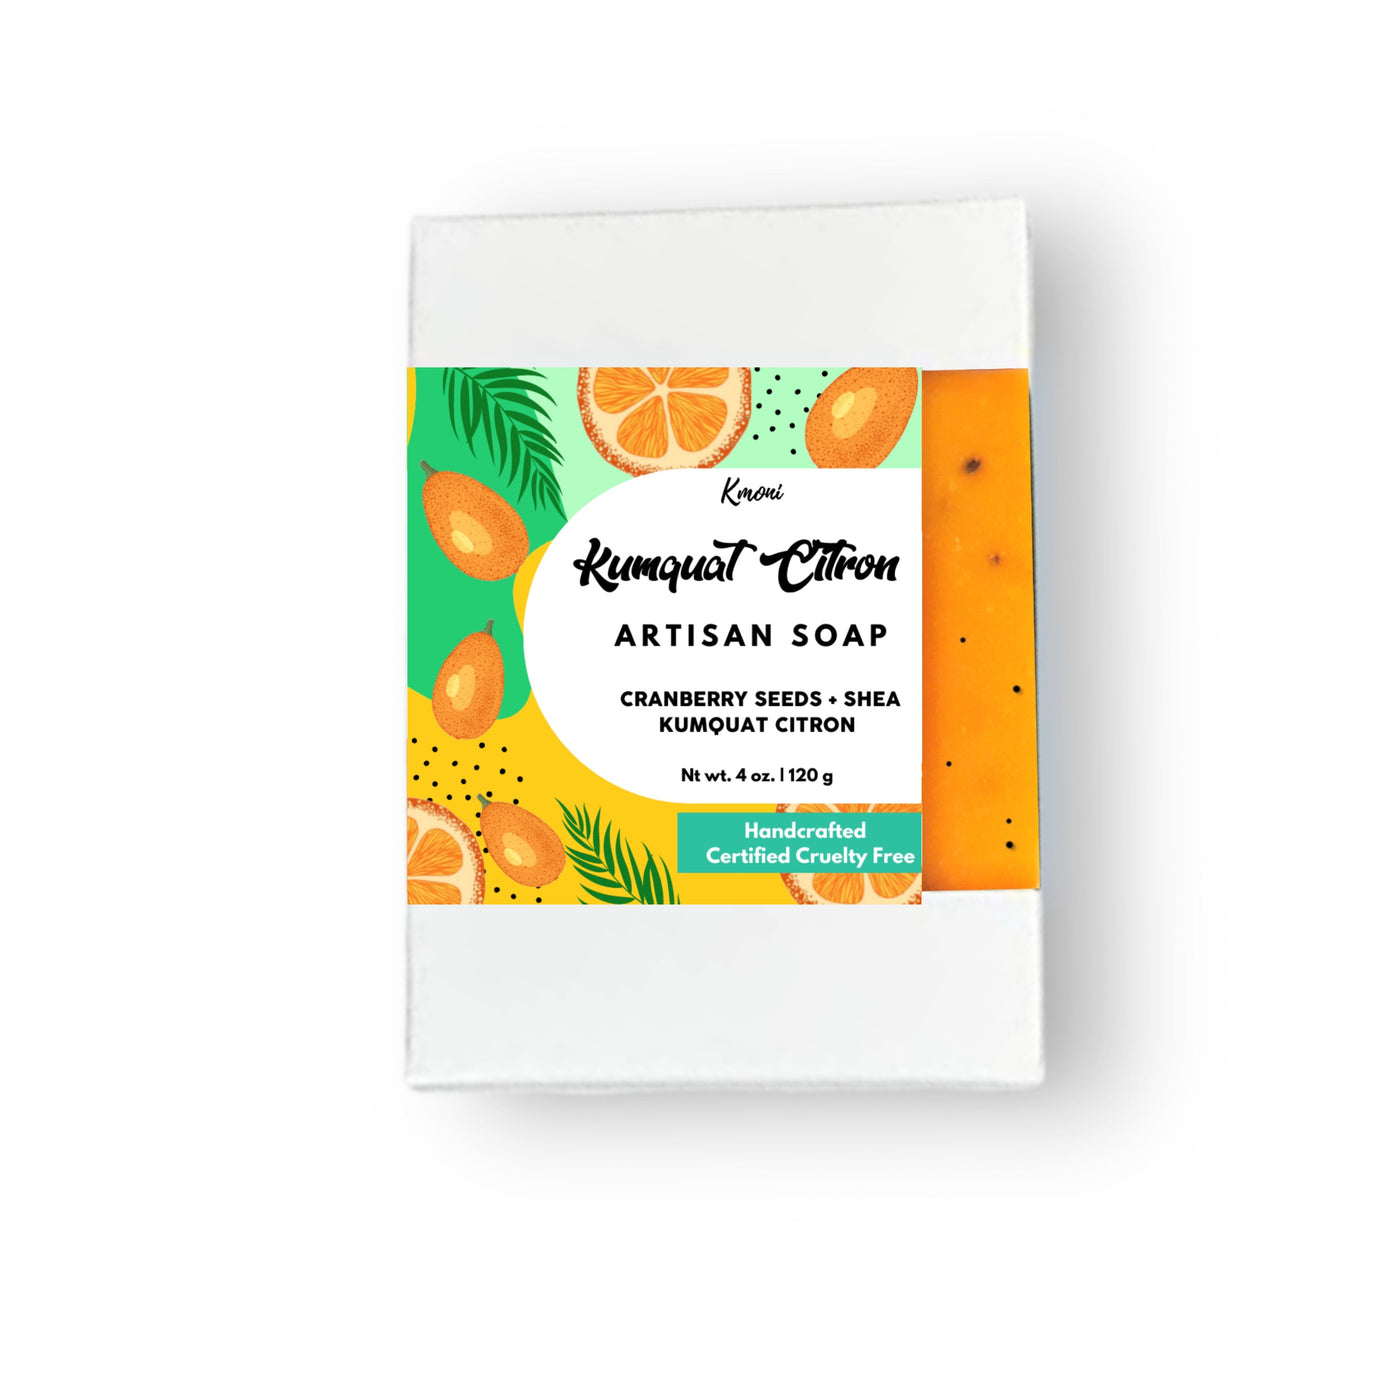 Kumquat Citron Artisan Soap